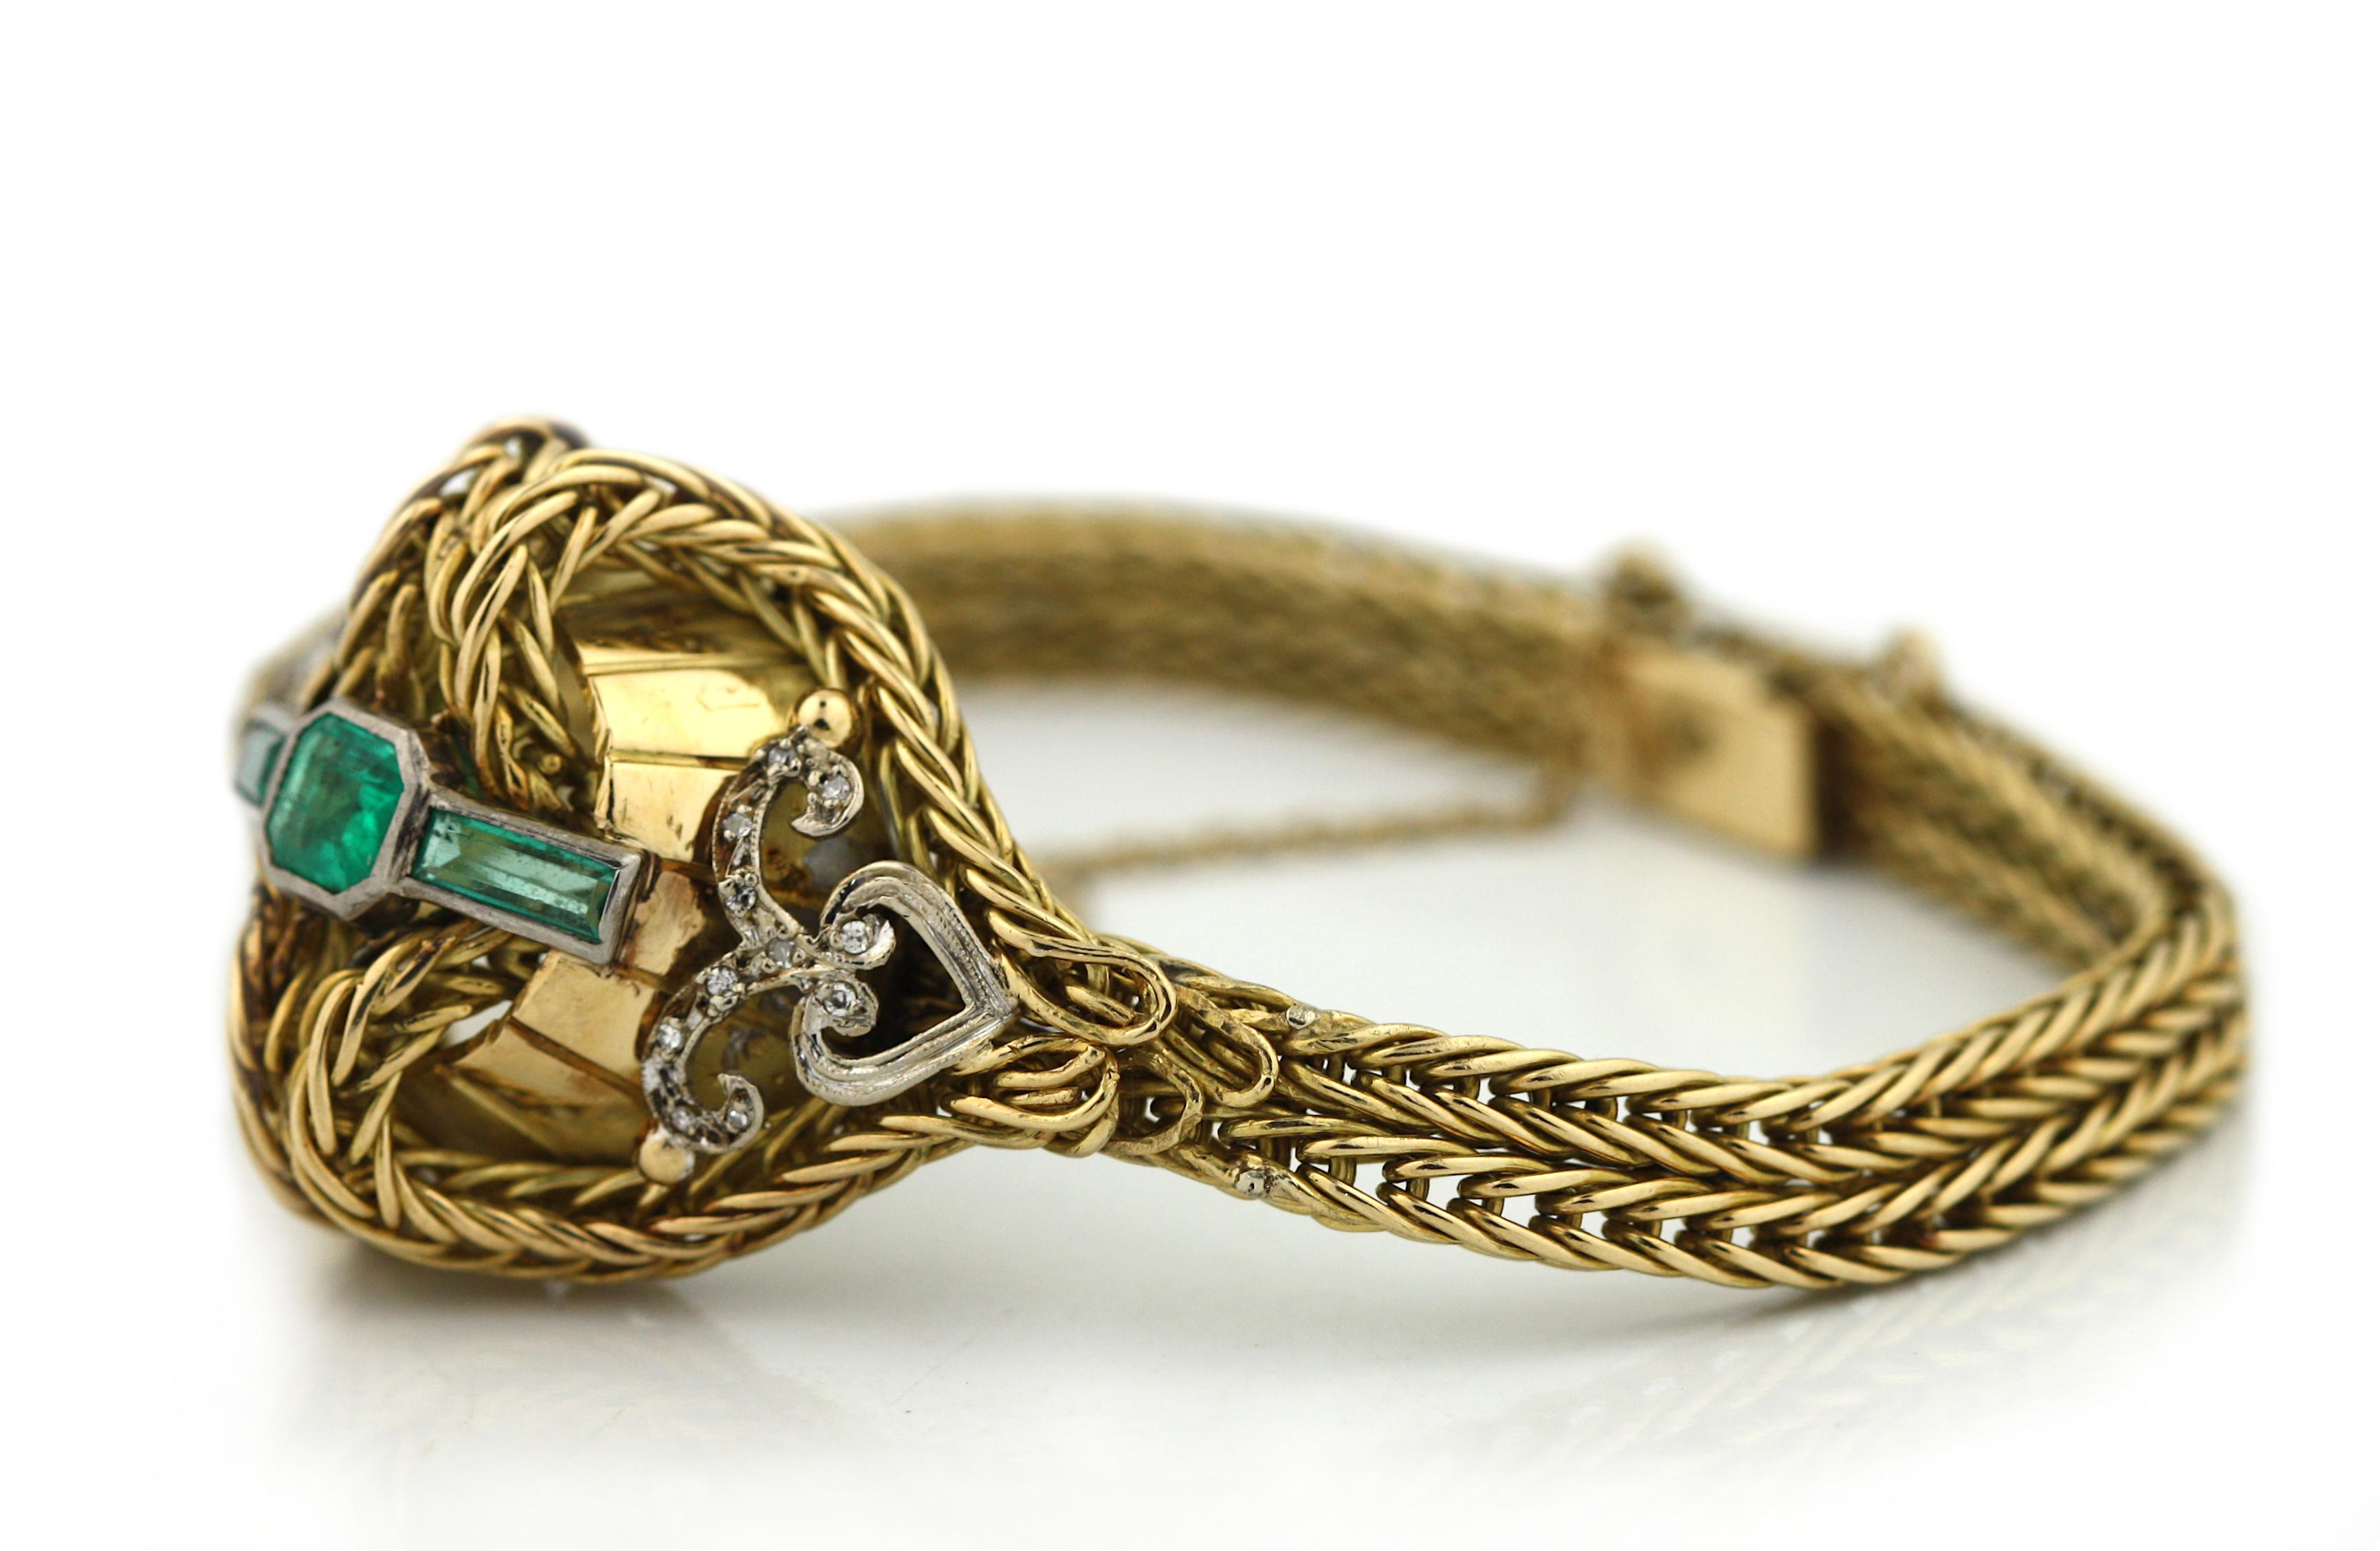  18 karat Gold, Colored Stone and Diamond Bracelet For Sale 3